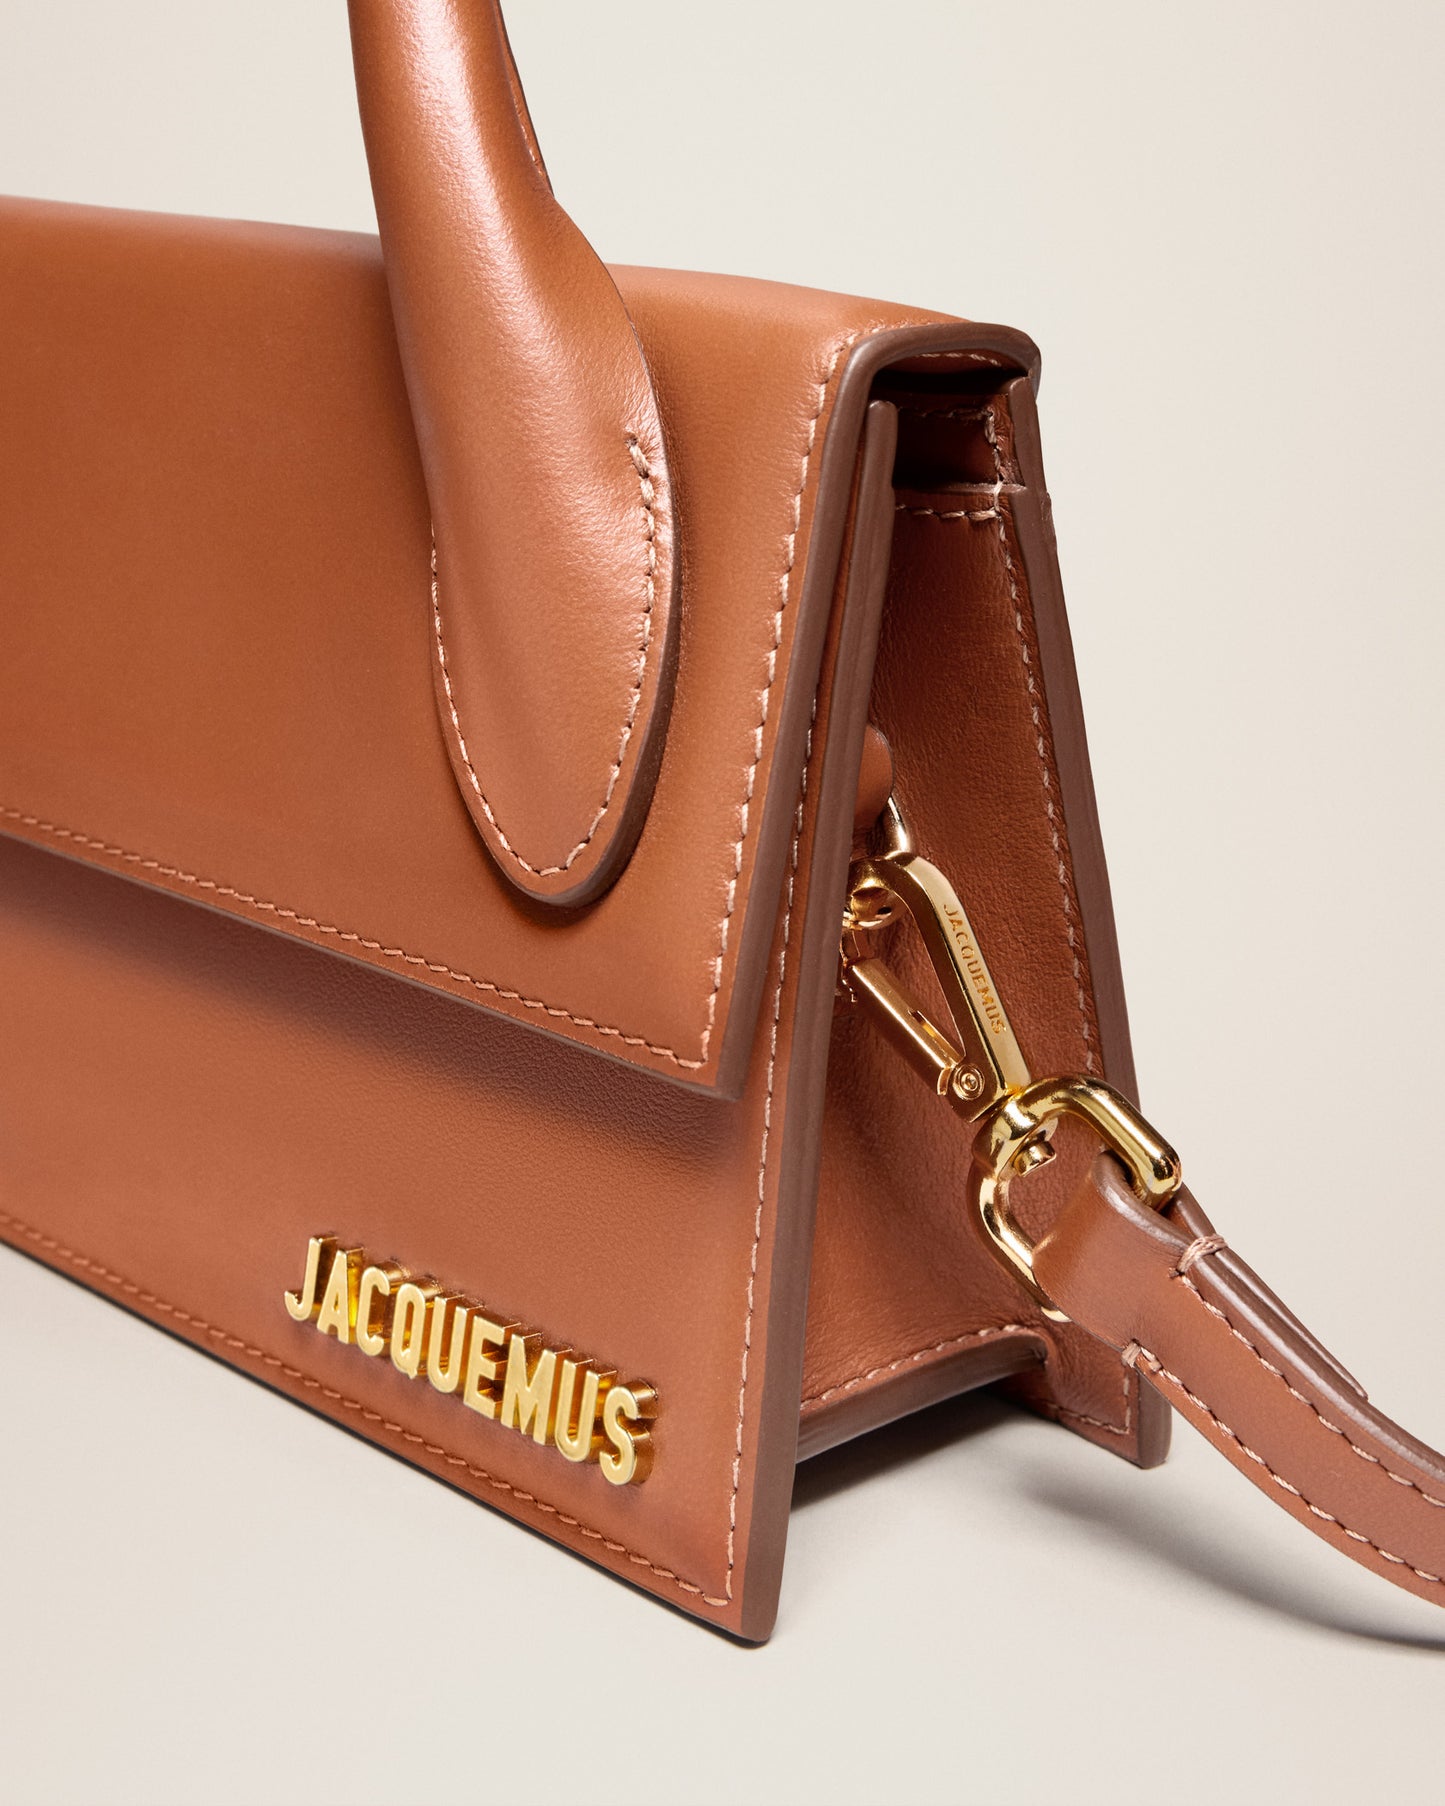 Jacquemus Le Chiquito Long Handbag